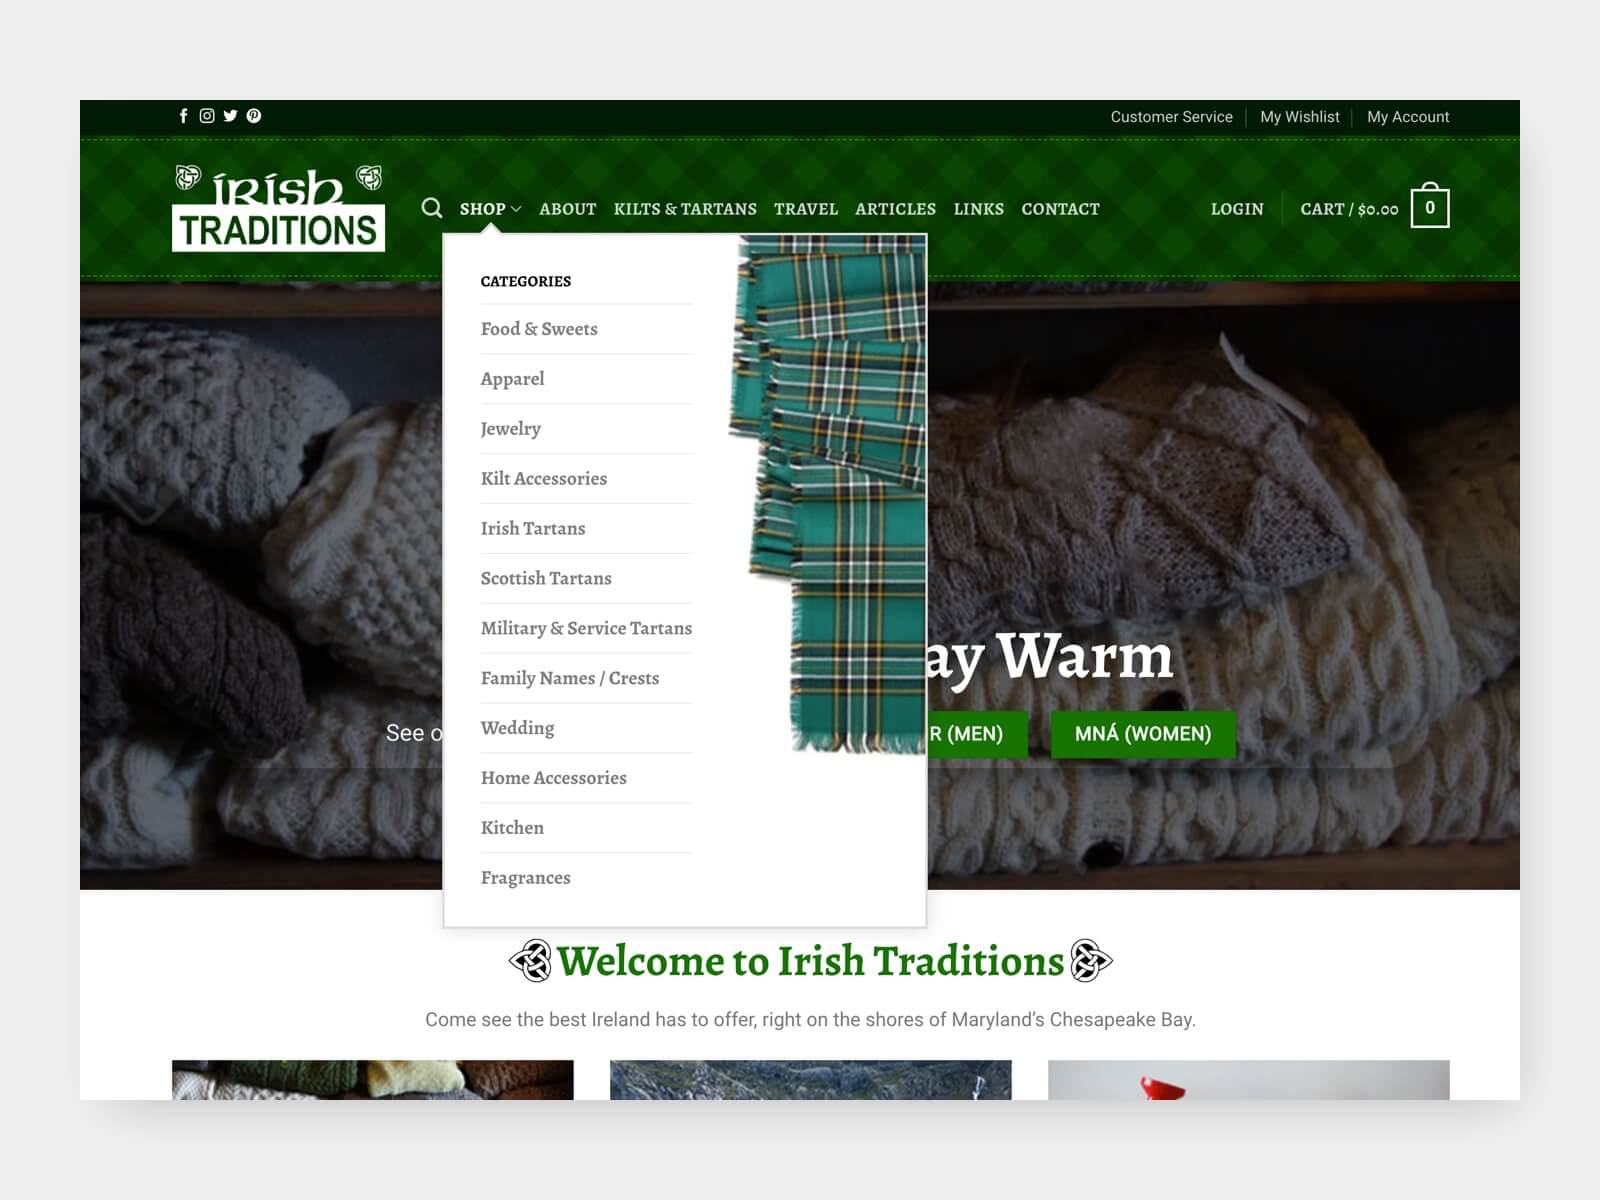 irish-traditions-menu@2x